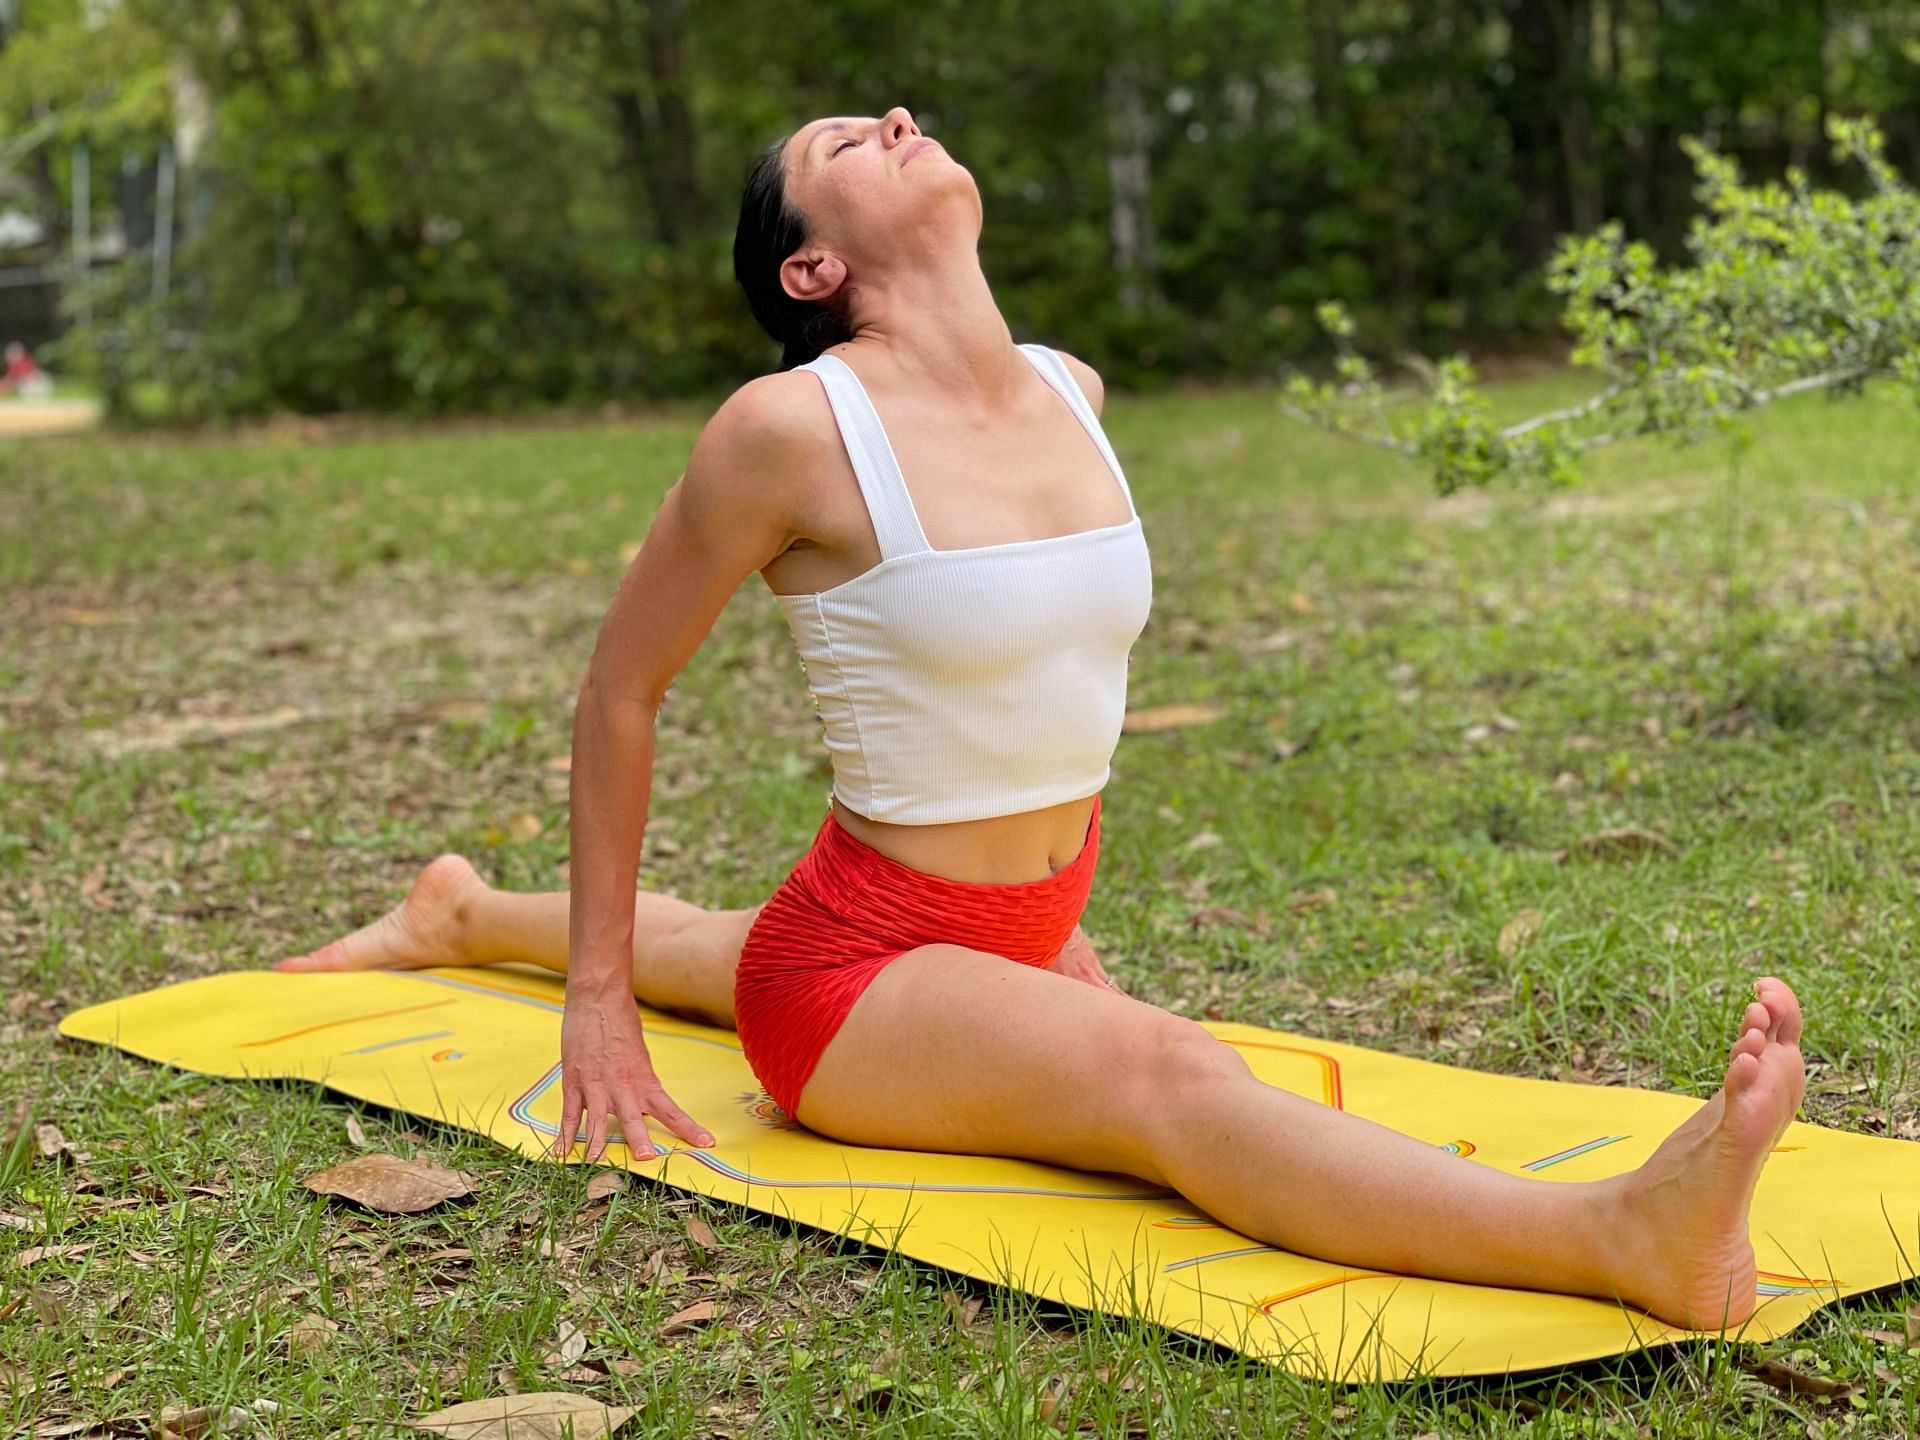 HIIT Yoga Fusion Workout 